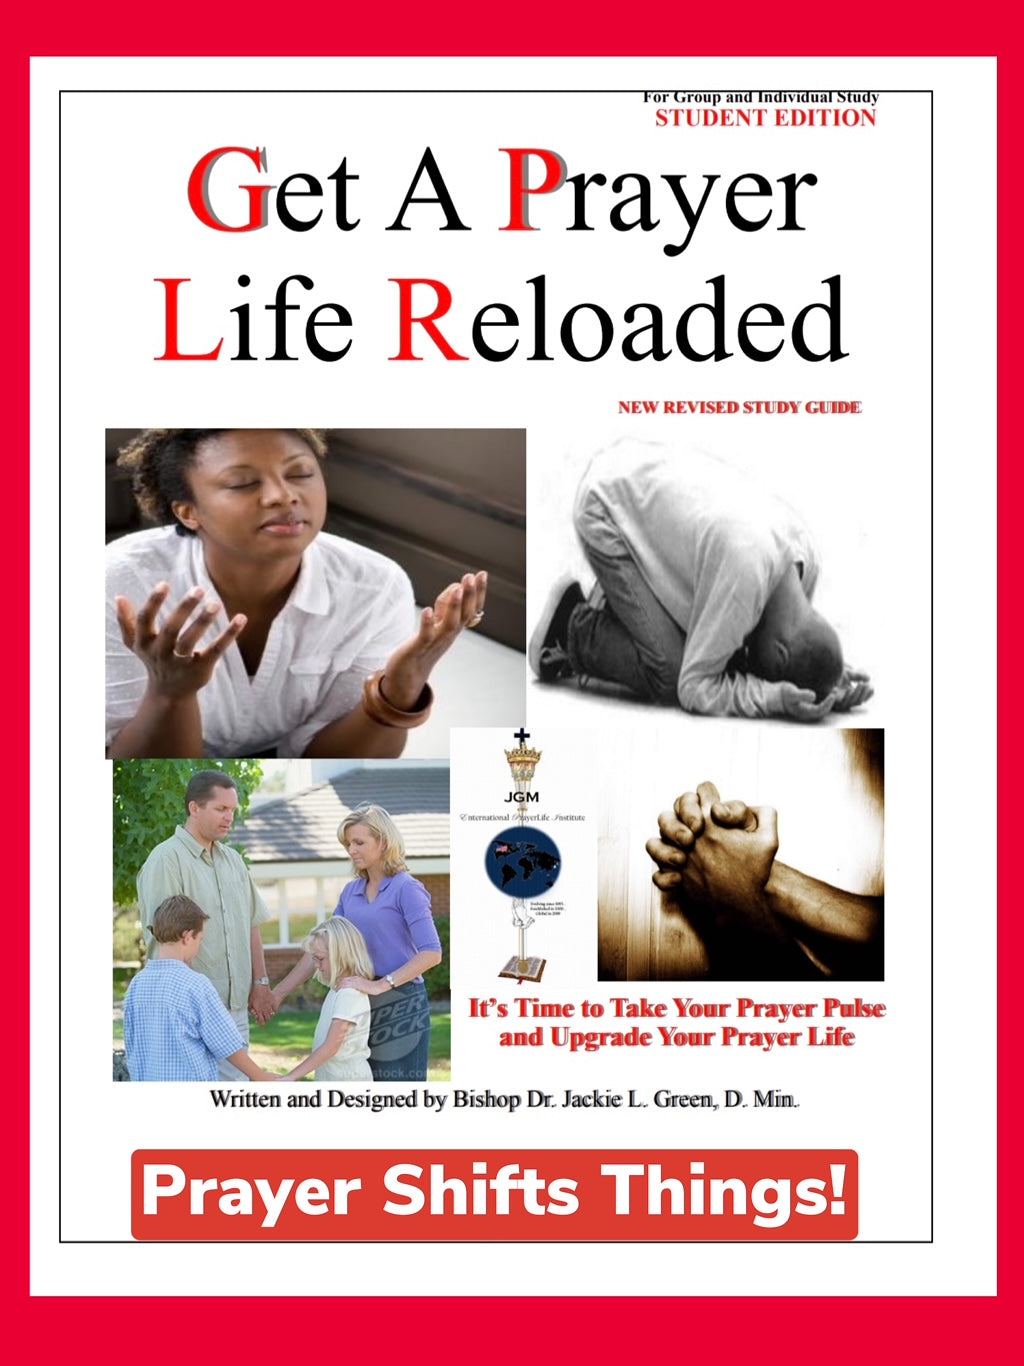 GET A PRAYER LIFE RELOADED